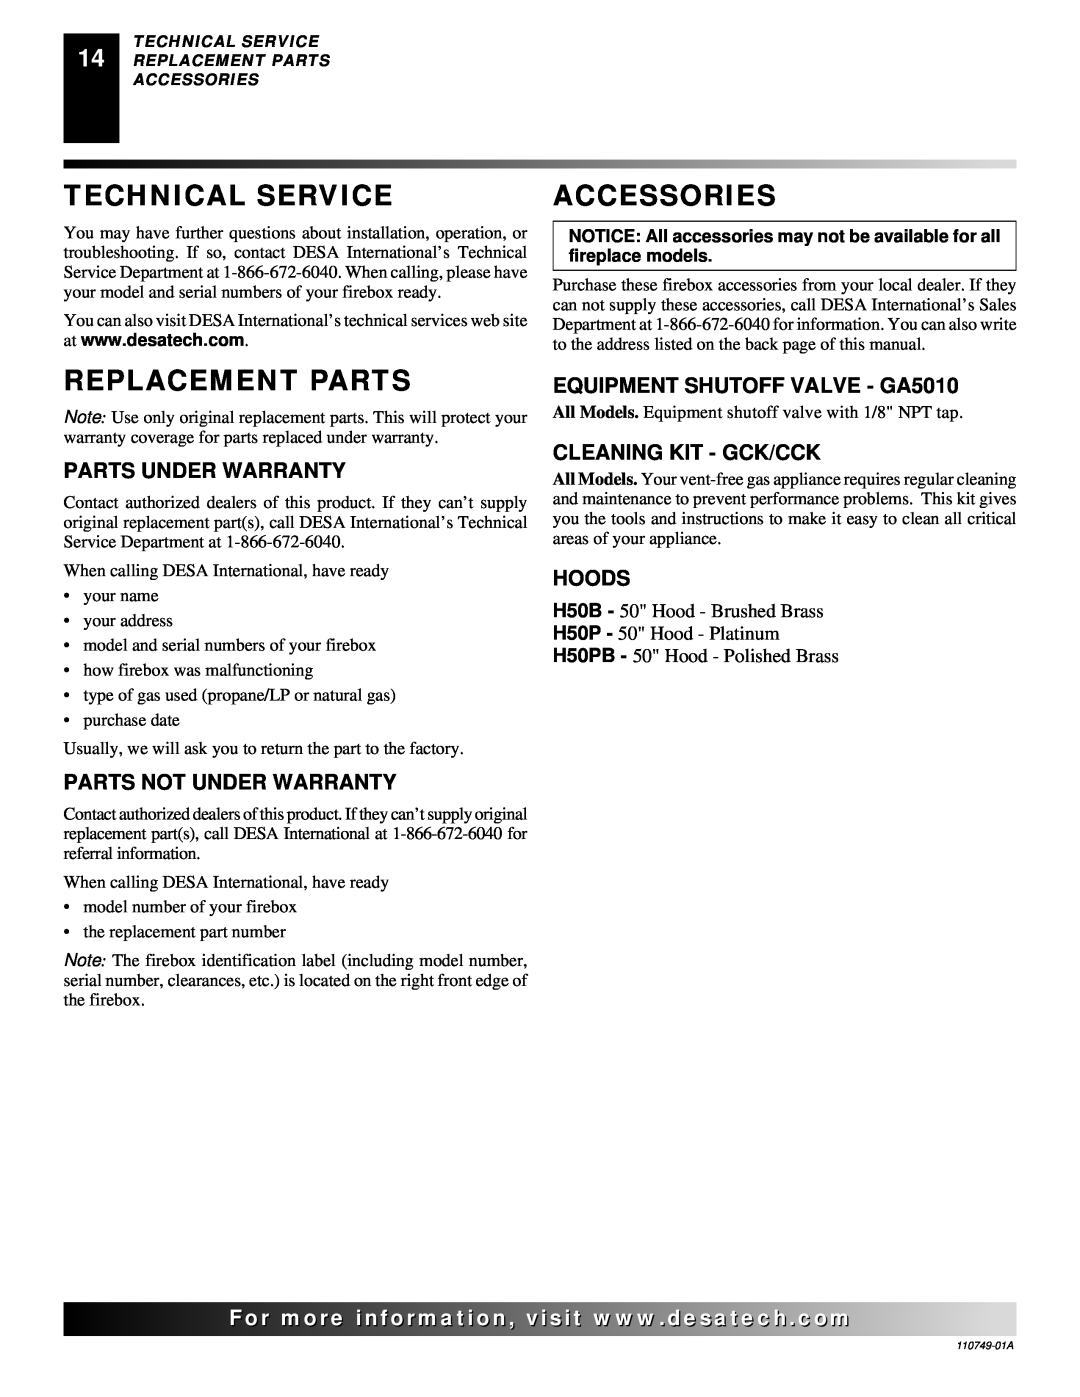 Desa V50SH Technical Service, Accessories, Replacement Parts, H50B - 50 Hood - Brushed Brass, H50P - 50 Hood - Platinum 